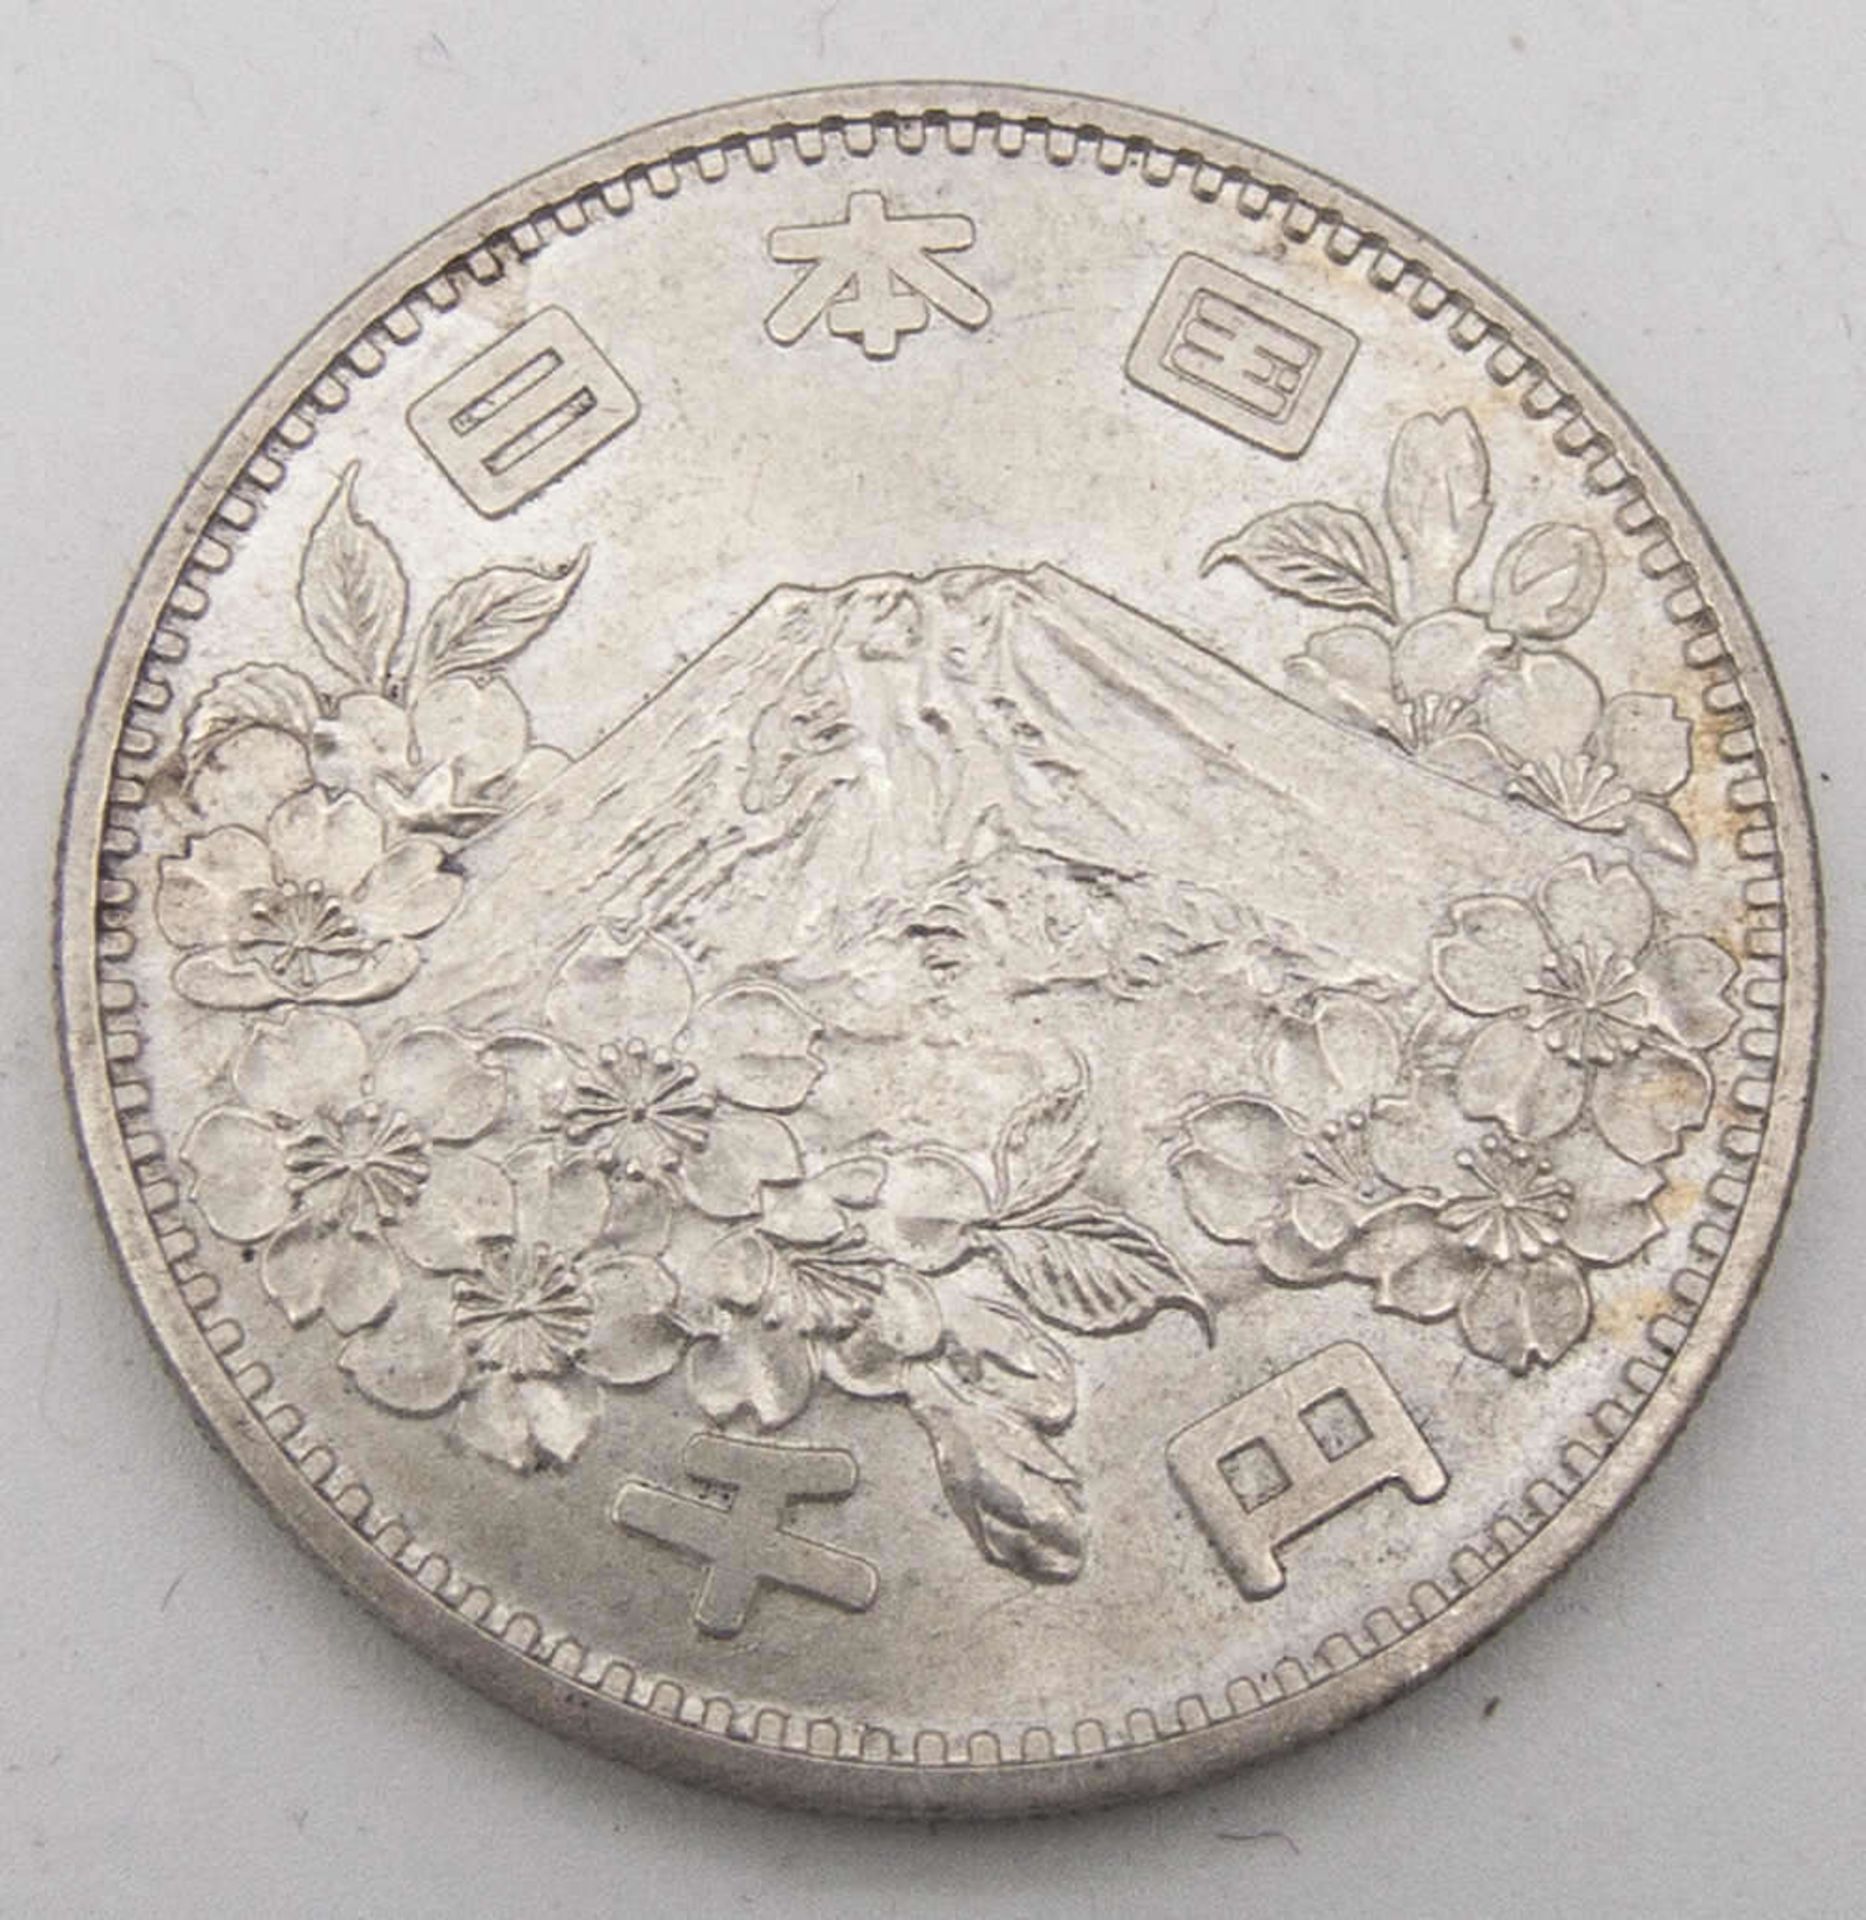 Japan 1964, 1000 Yen - Silbermünze. Erhaltung: vz.Japan 1964, 1000 yen - silver coin. Condition: - Bild 2 aus 2